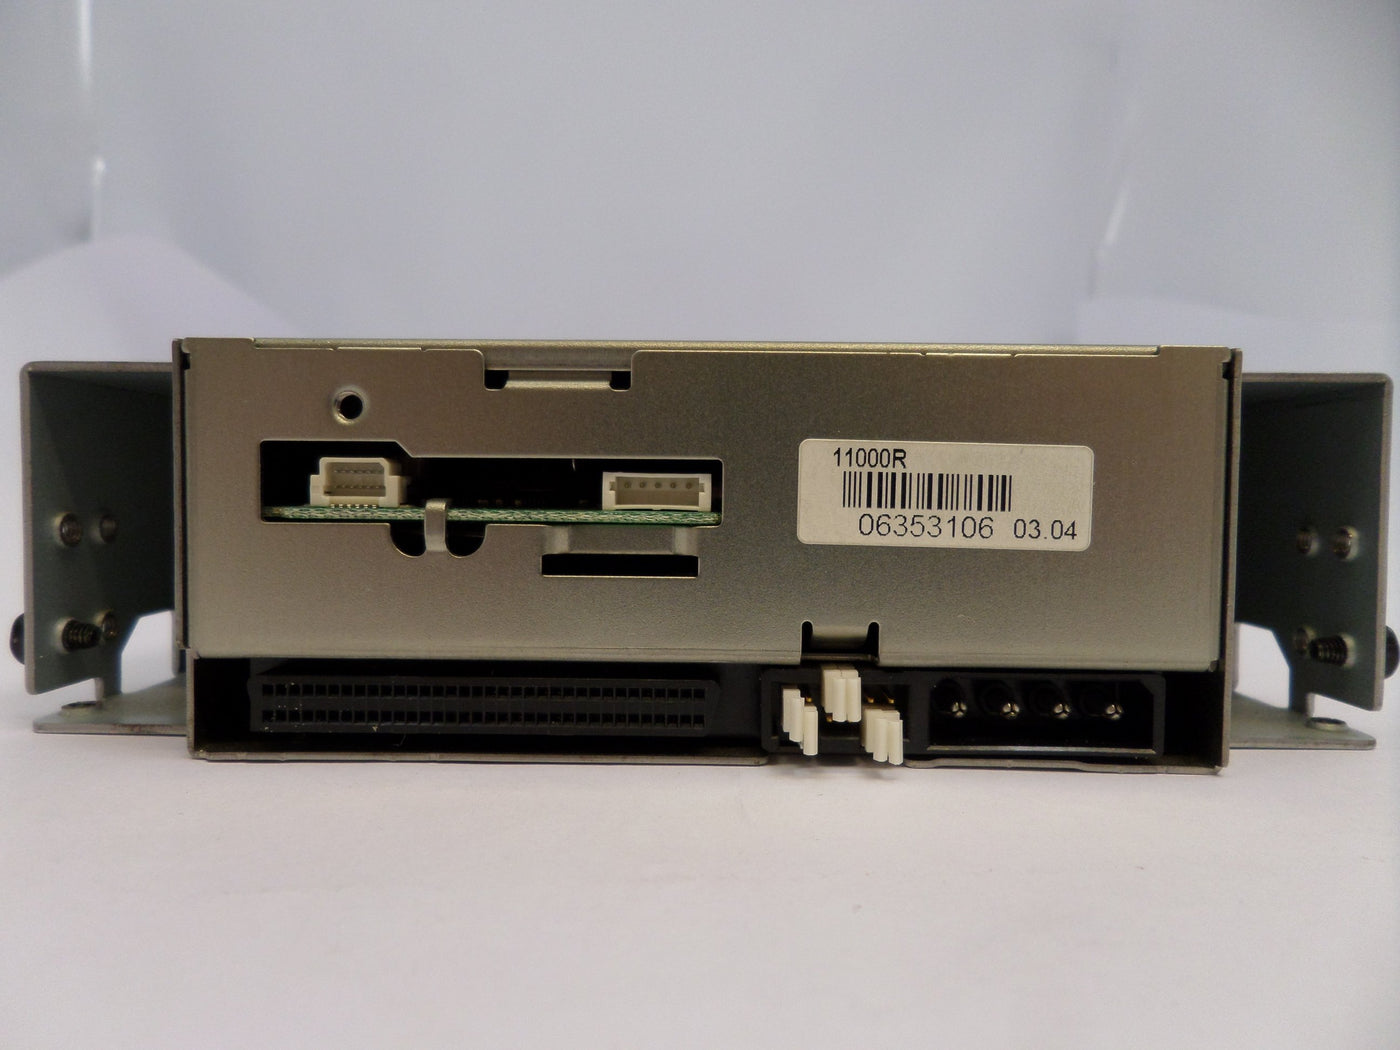 MC5112_SDT-11000_Sony Digital Storage Unit Inc Cable - Image6